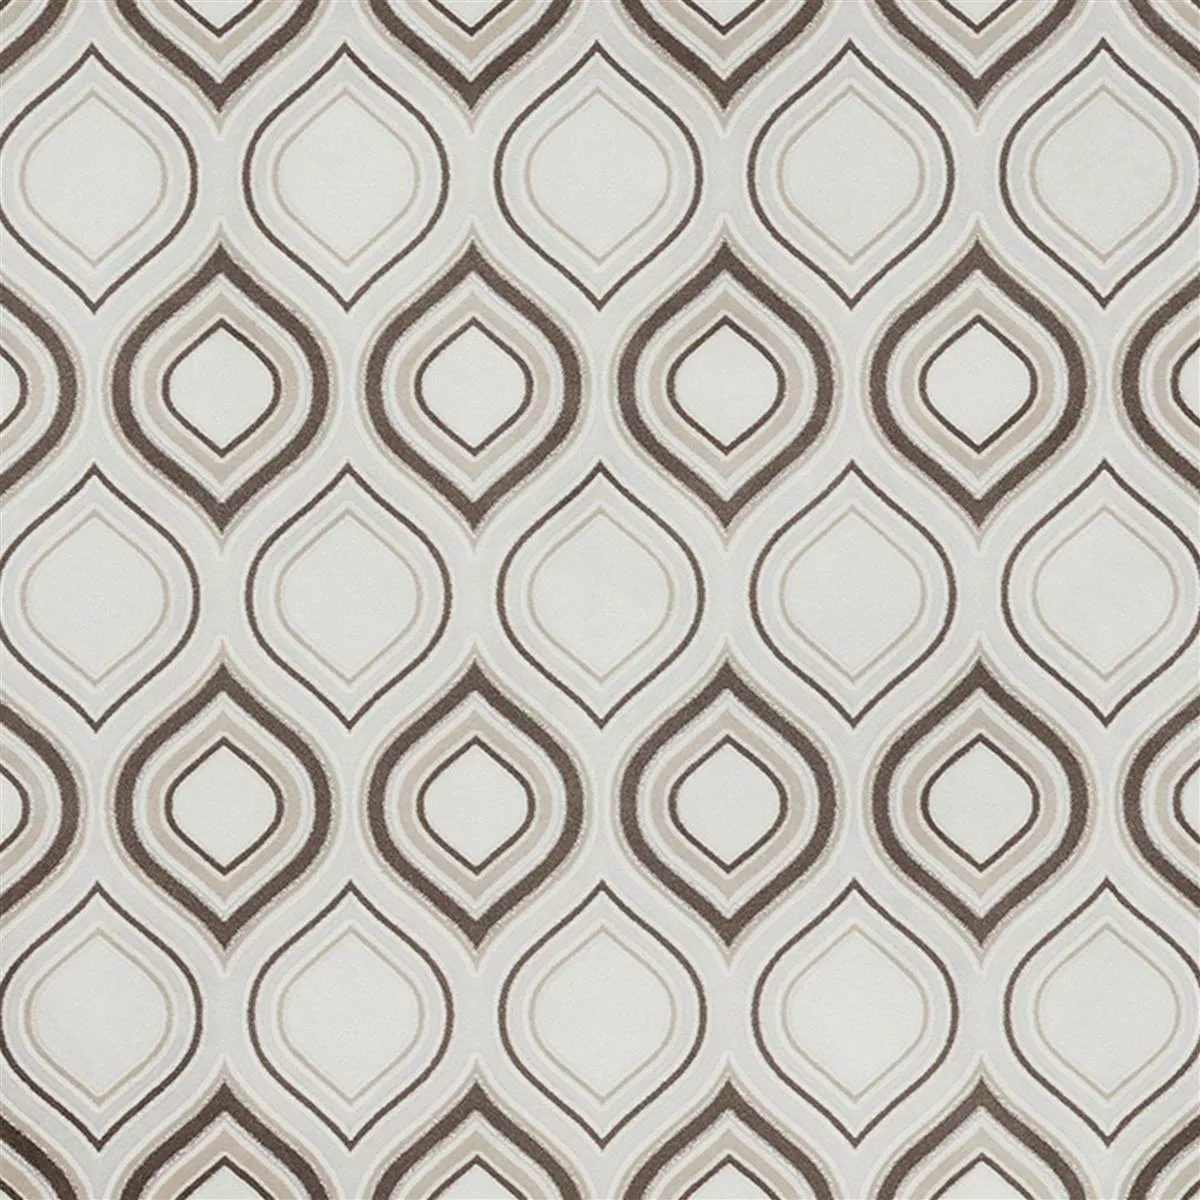 Wall Tiles Bolonia Glossy Brown 13x13cm 